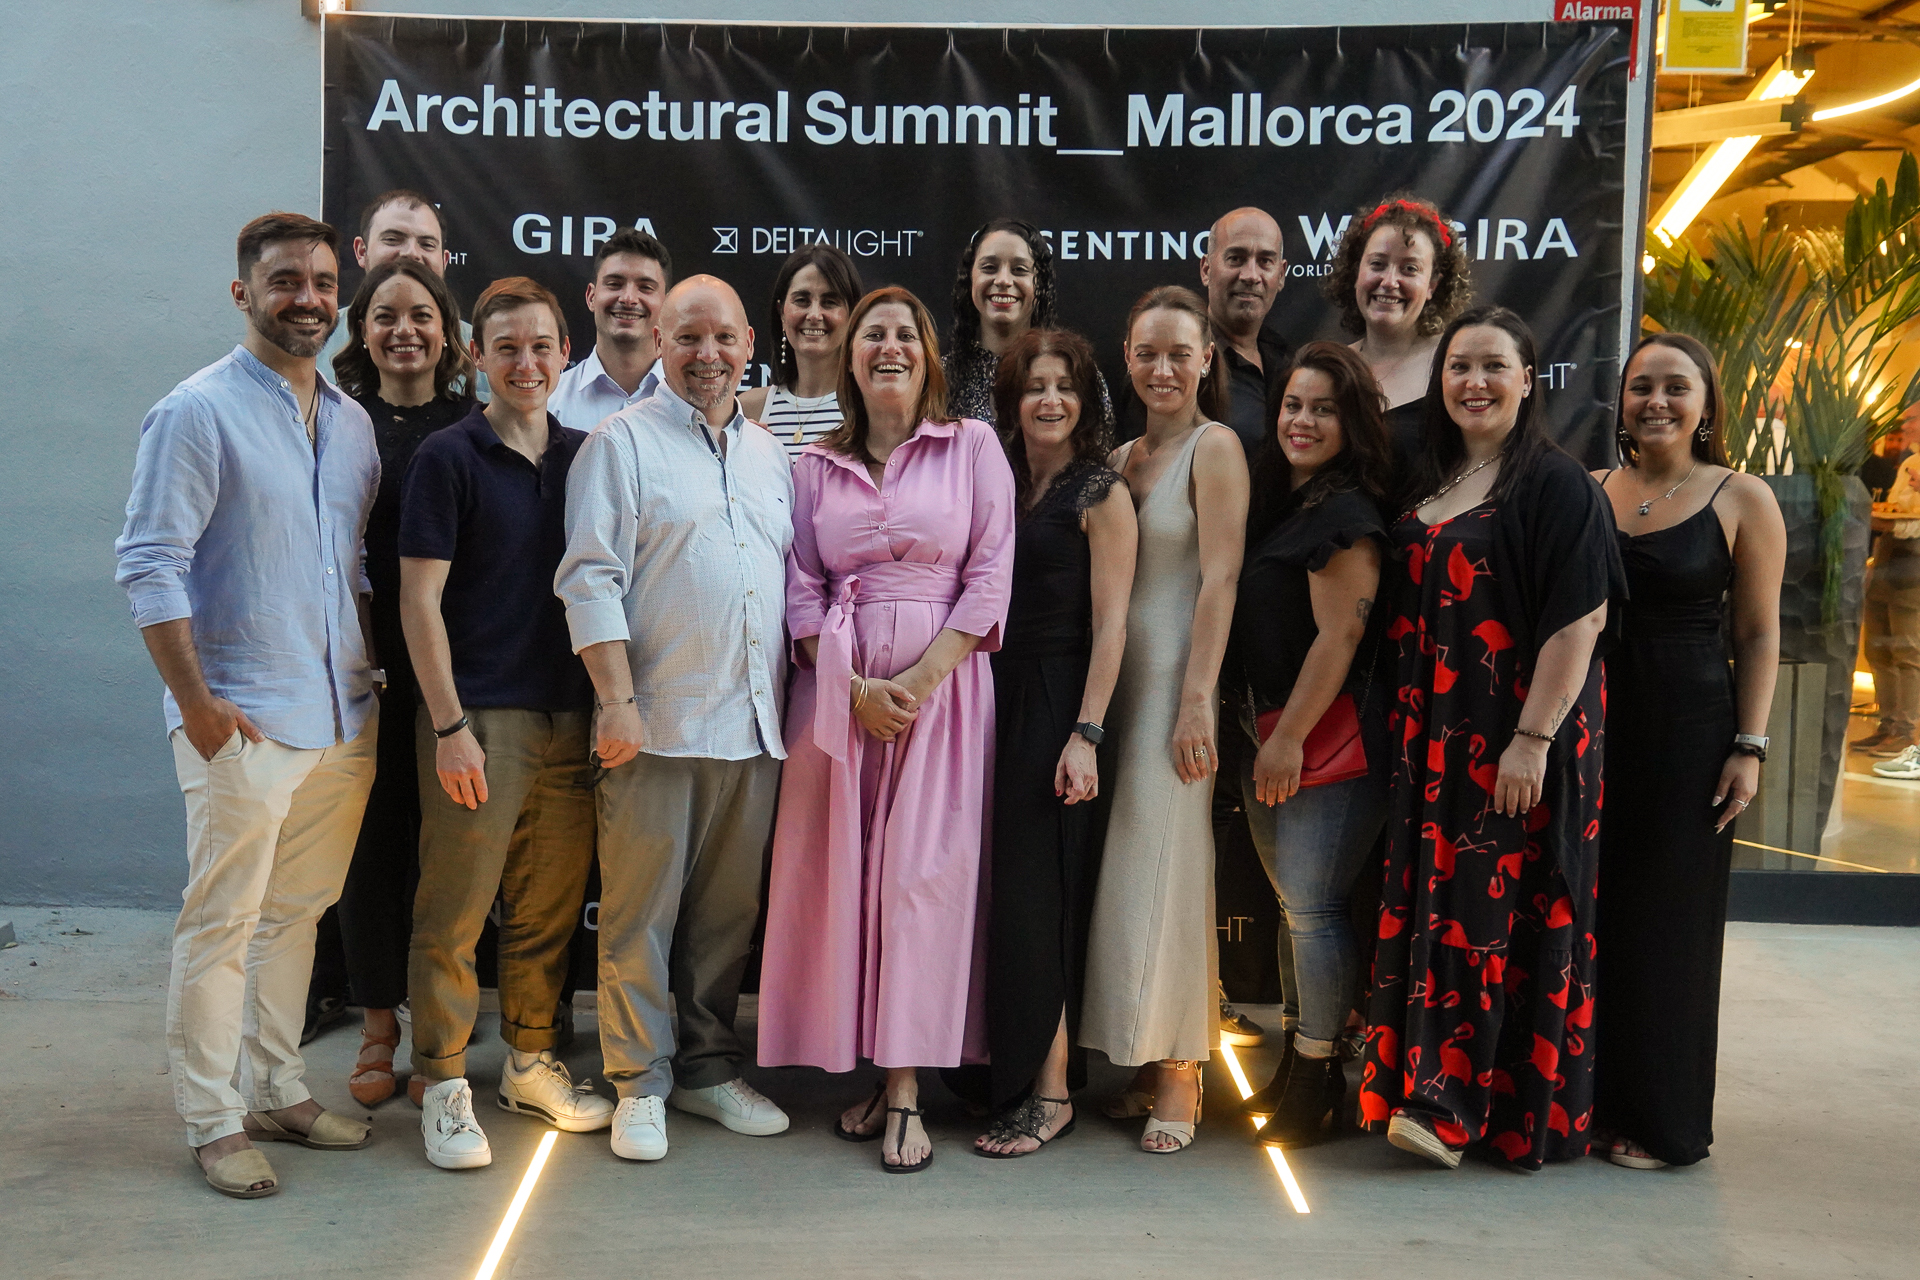 Deltalight Architectural Summit Mallorca Worldlight 6 6 24 Eventone.es 05532